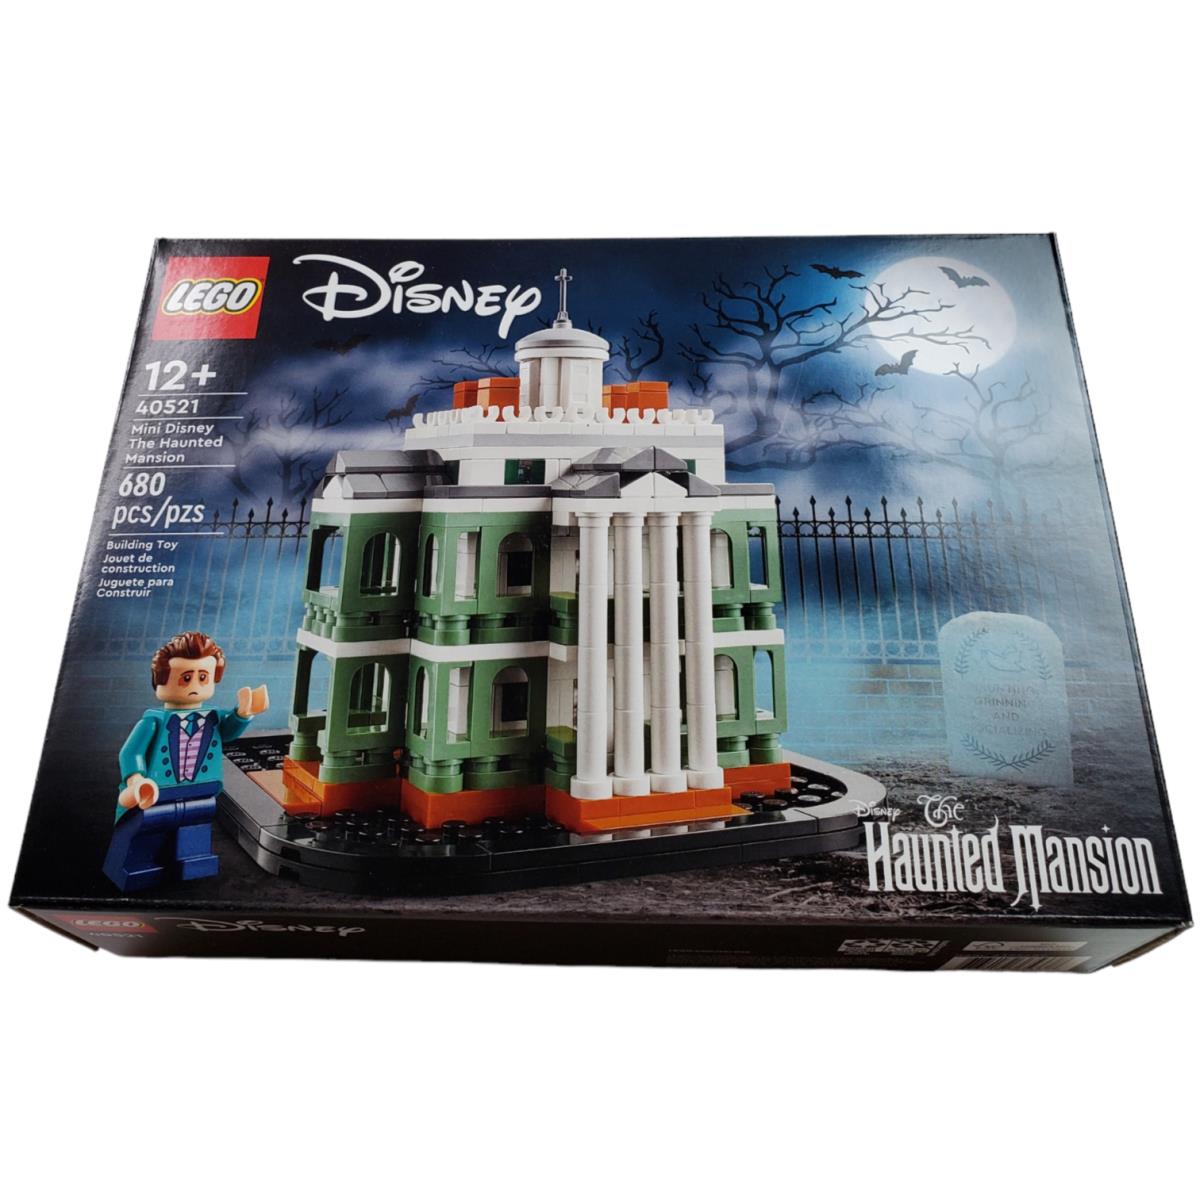 Lego 40521 Mini Disney The Haunted Mansion 680 Pieces